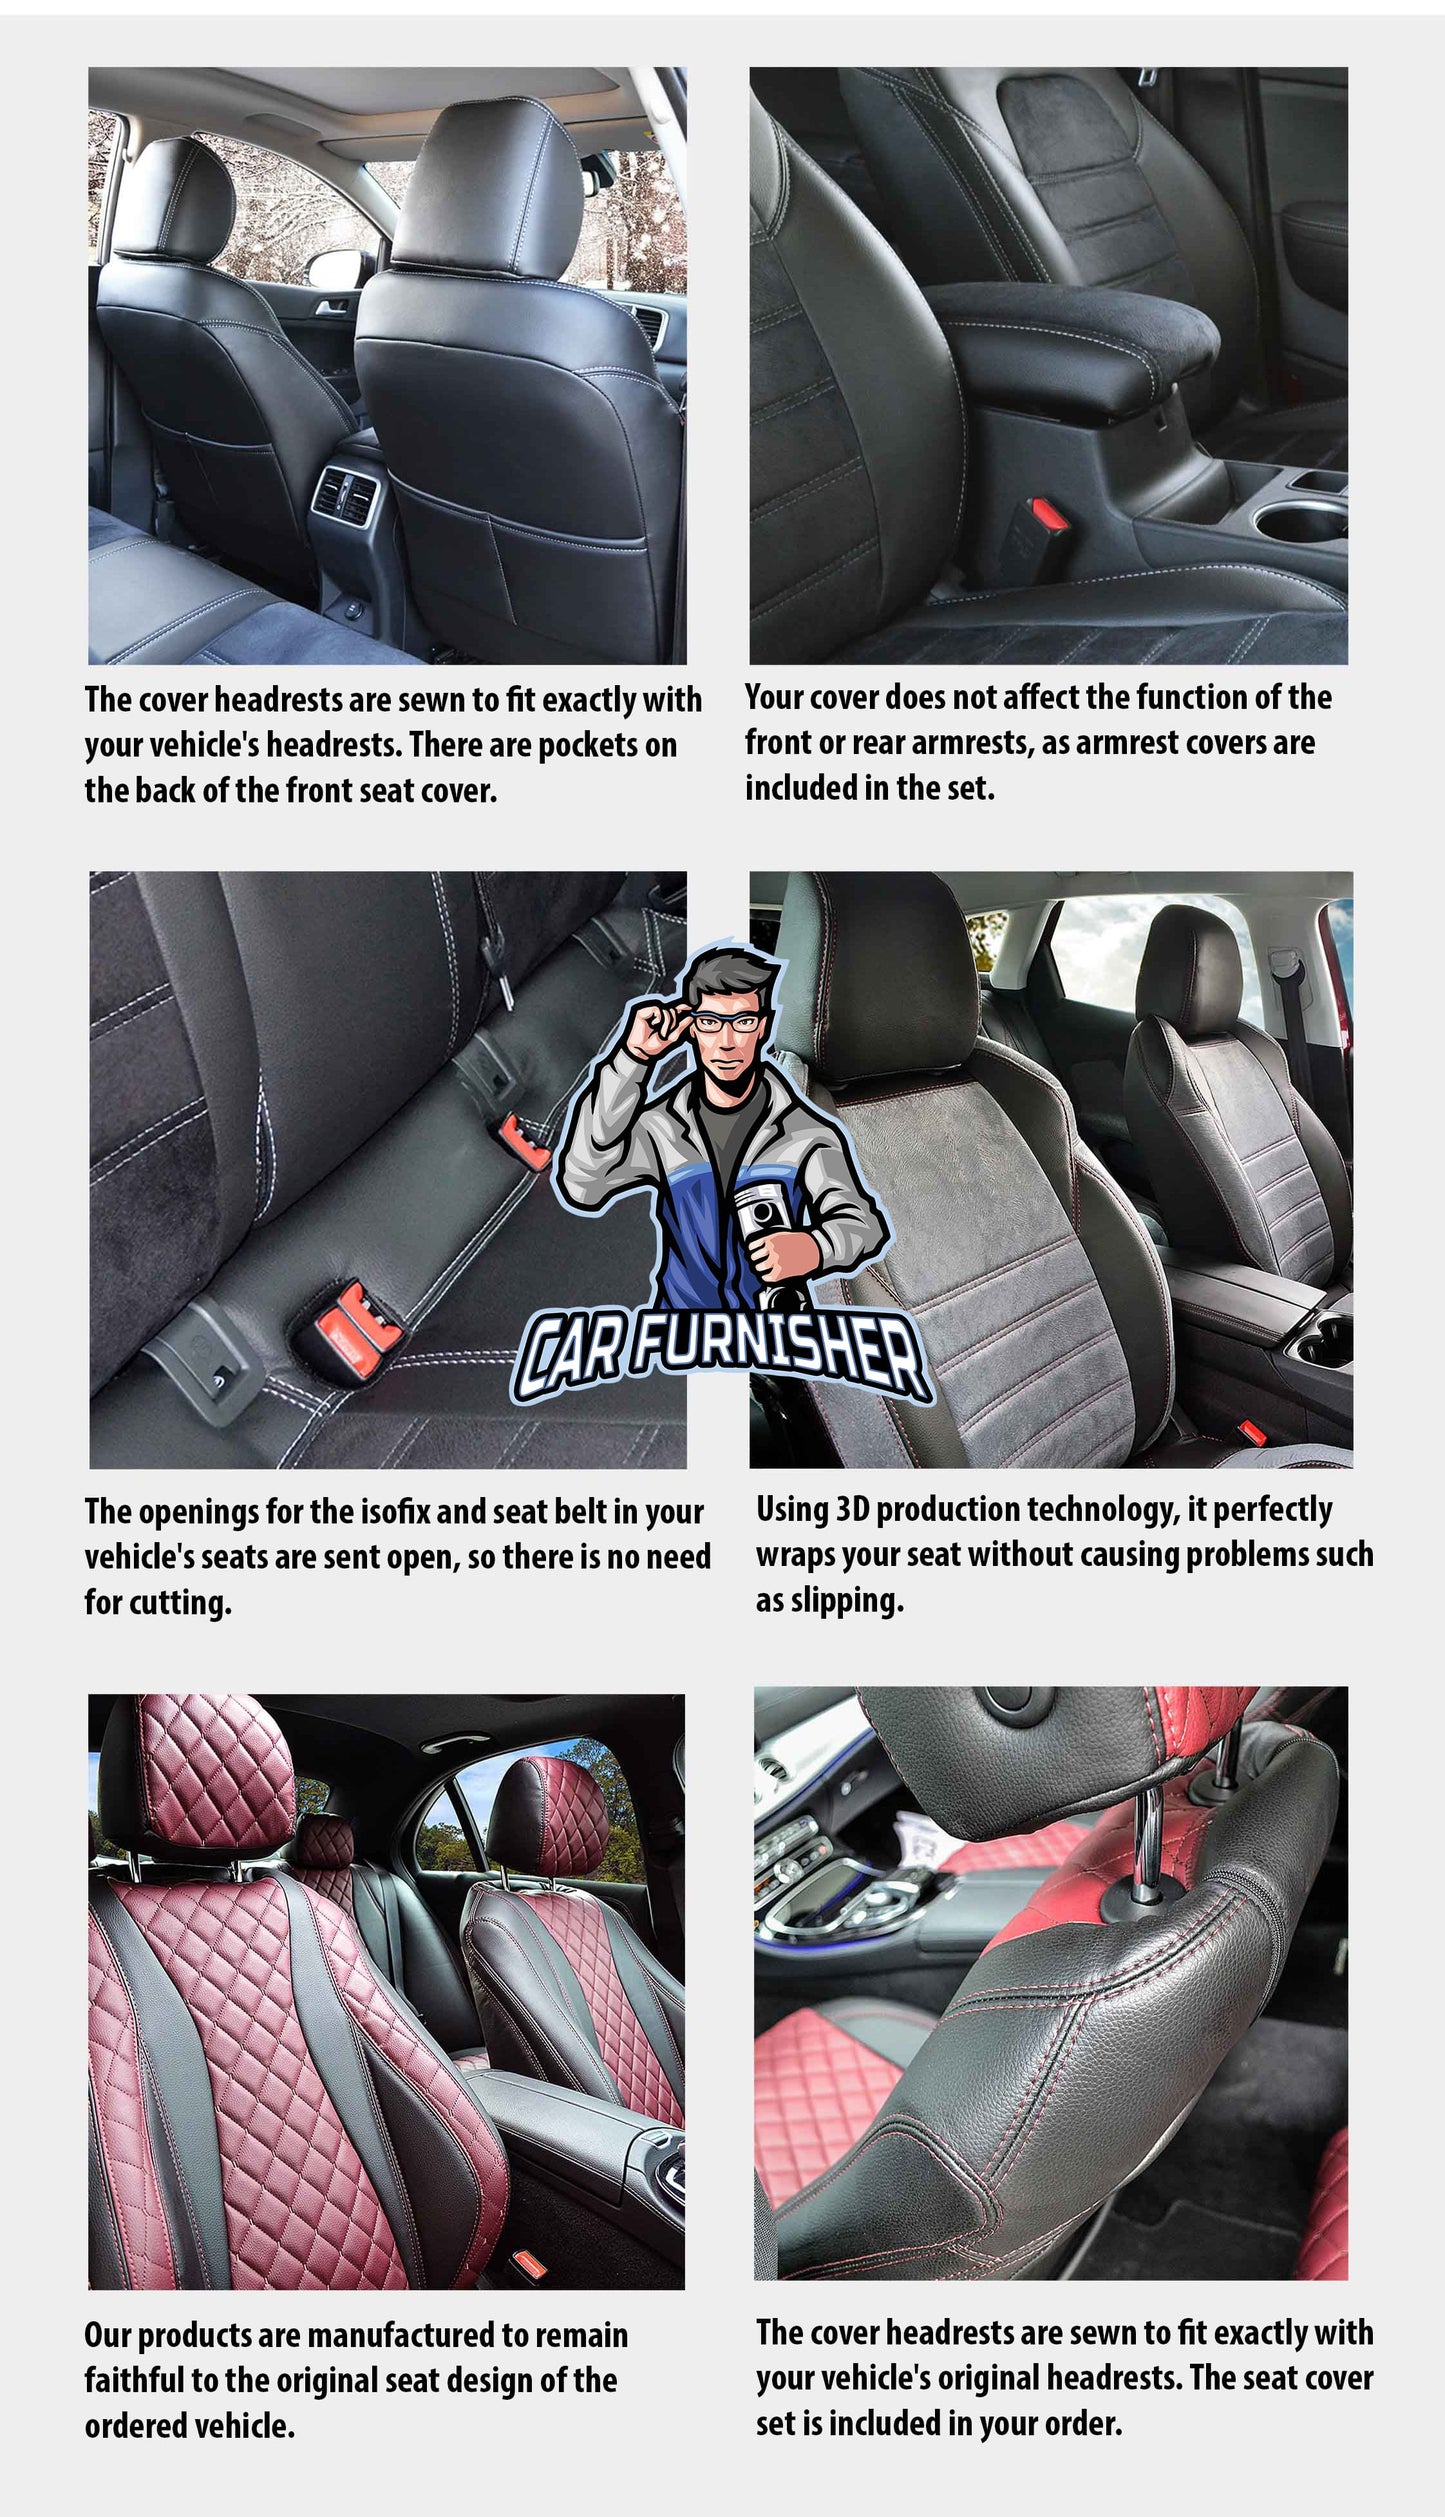 Mazda E2200 Seat Covers Istanbul Leather Design Black Leather